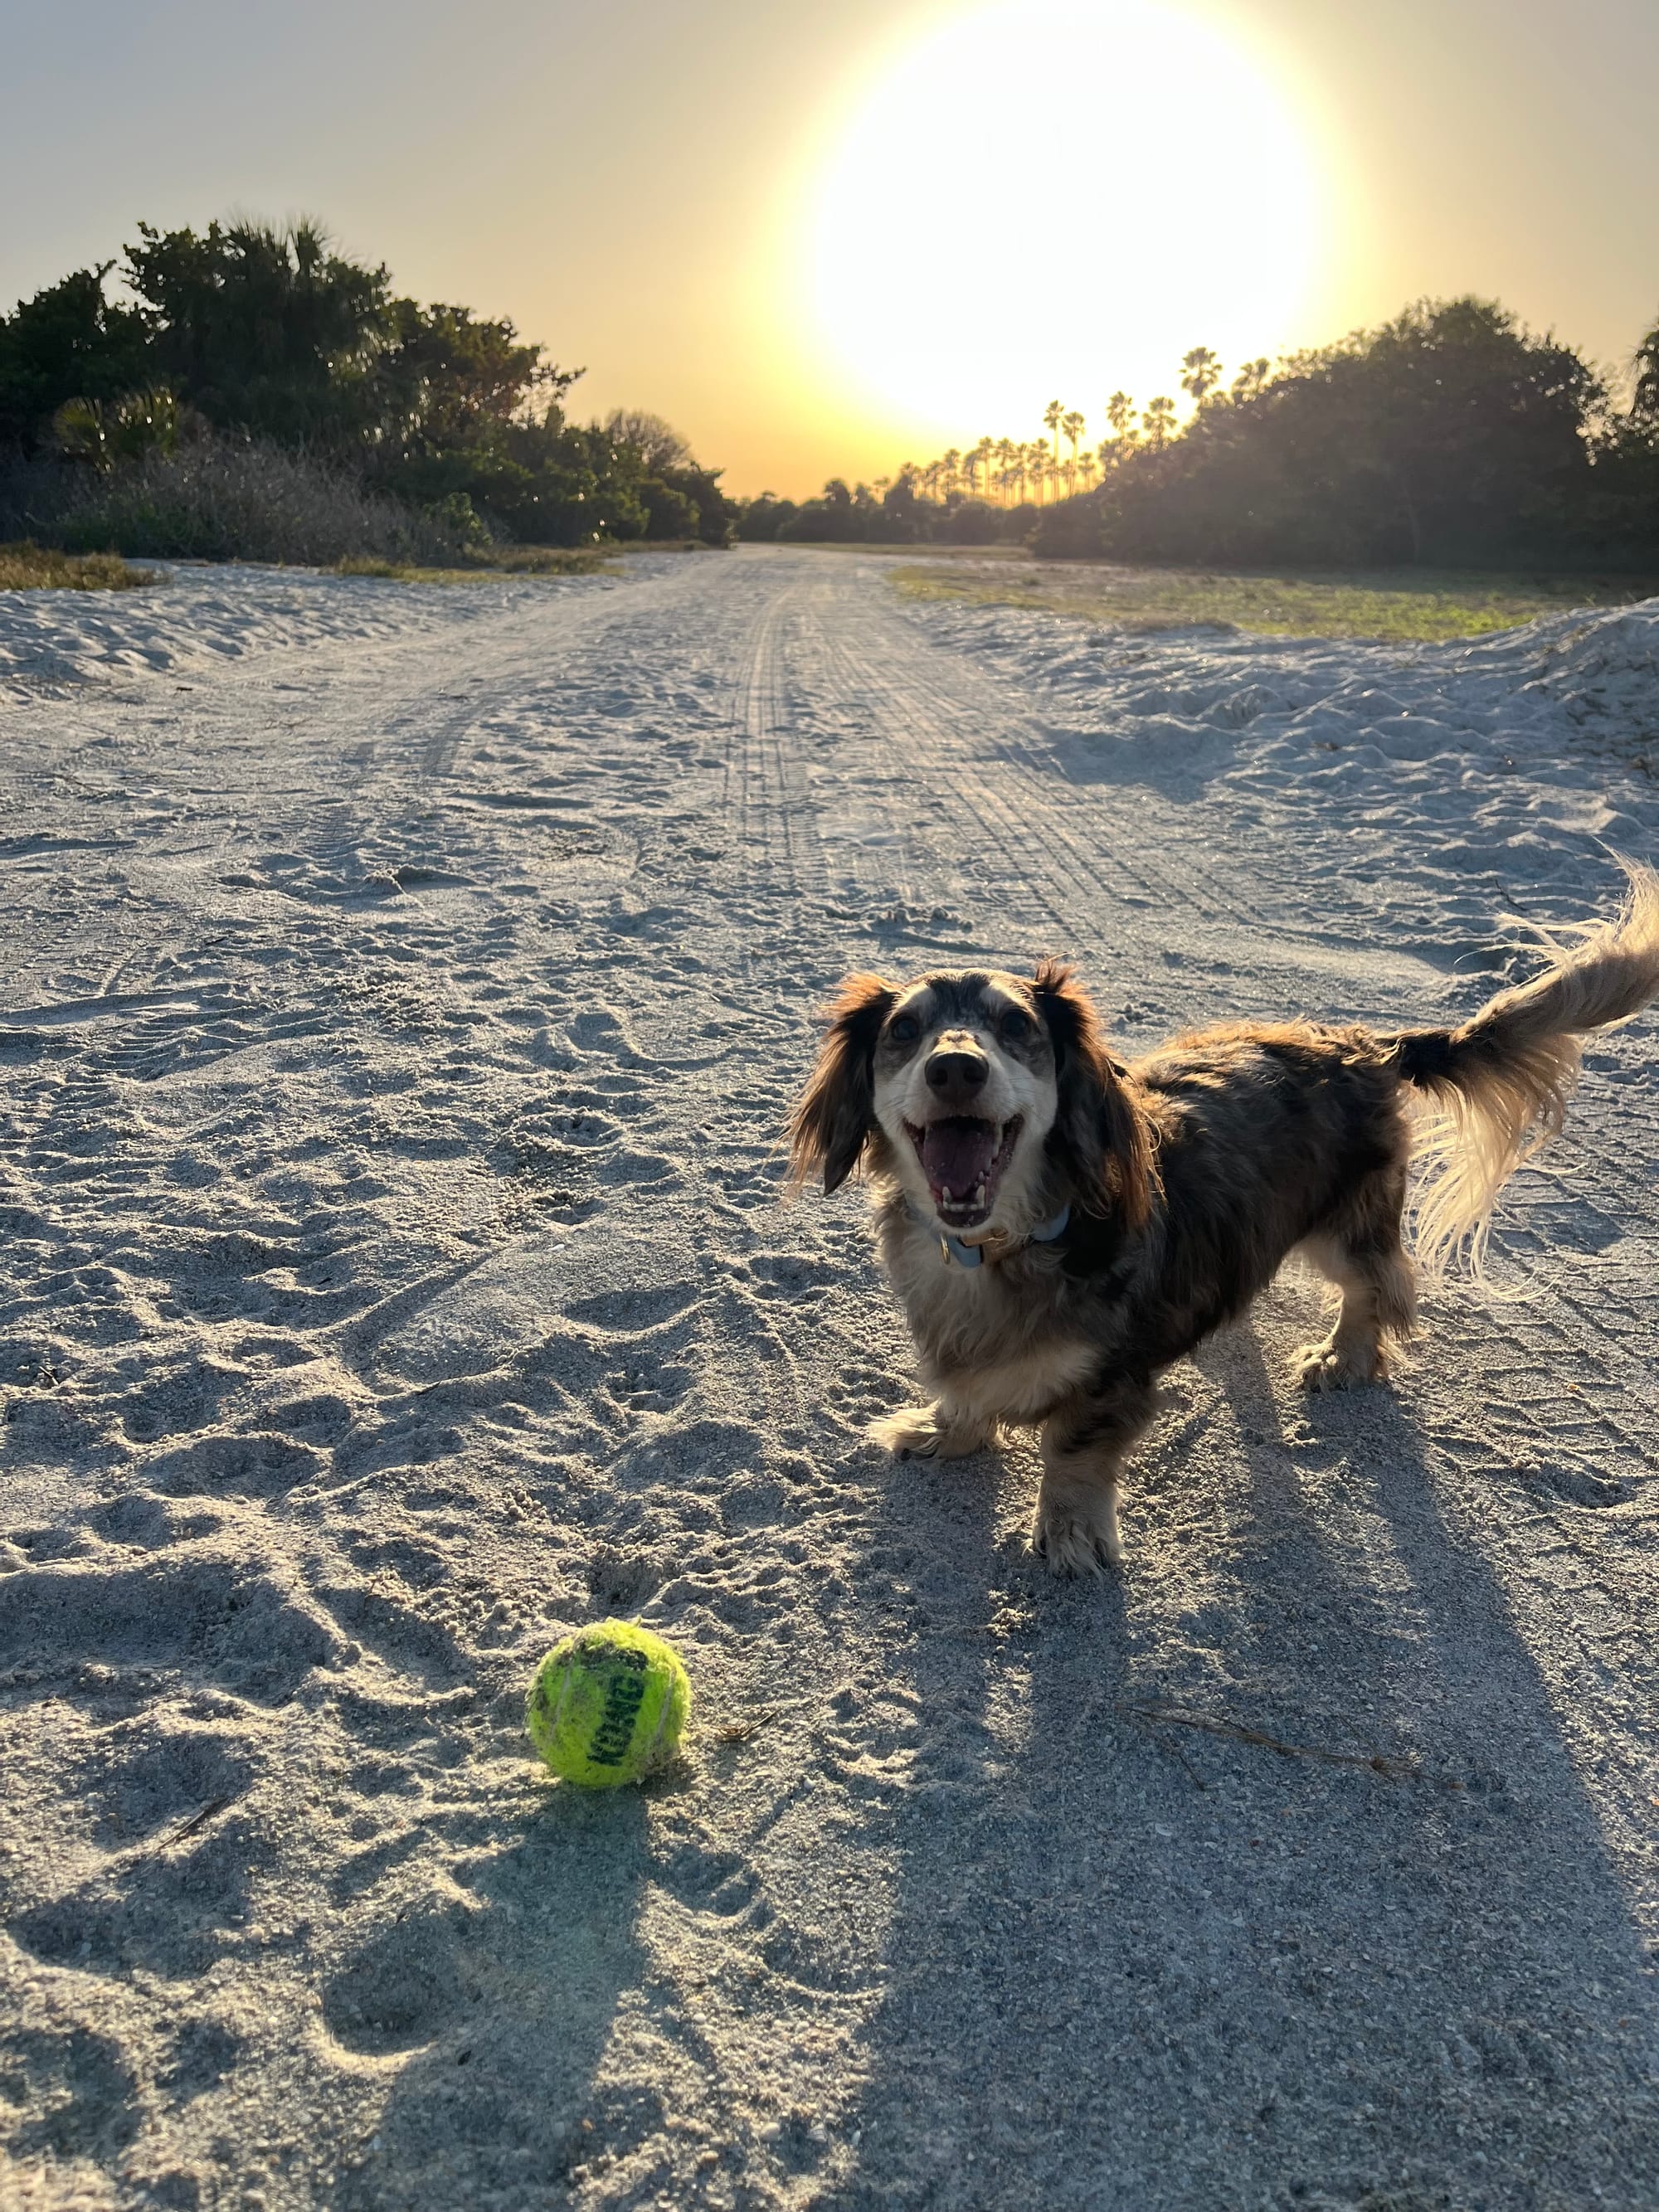 DOGFLUENCERS: Meet Jax, The Tennis Ball Obsessed Pup